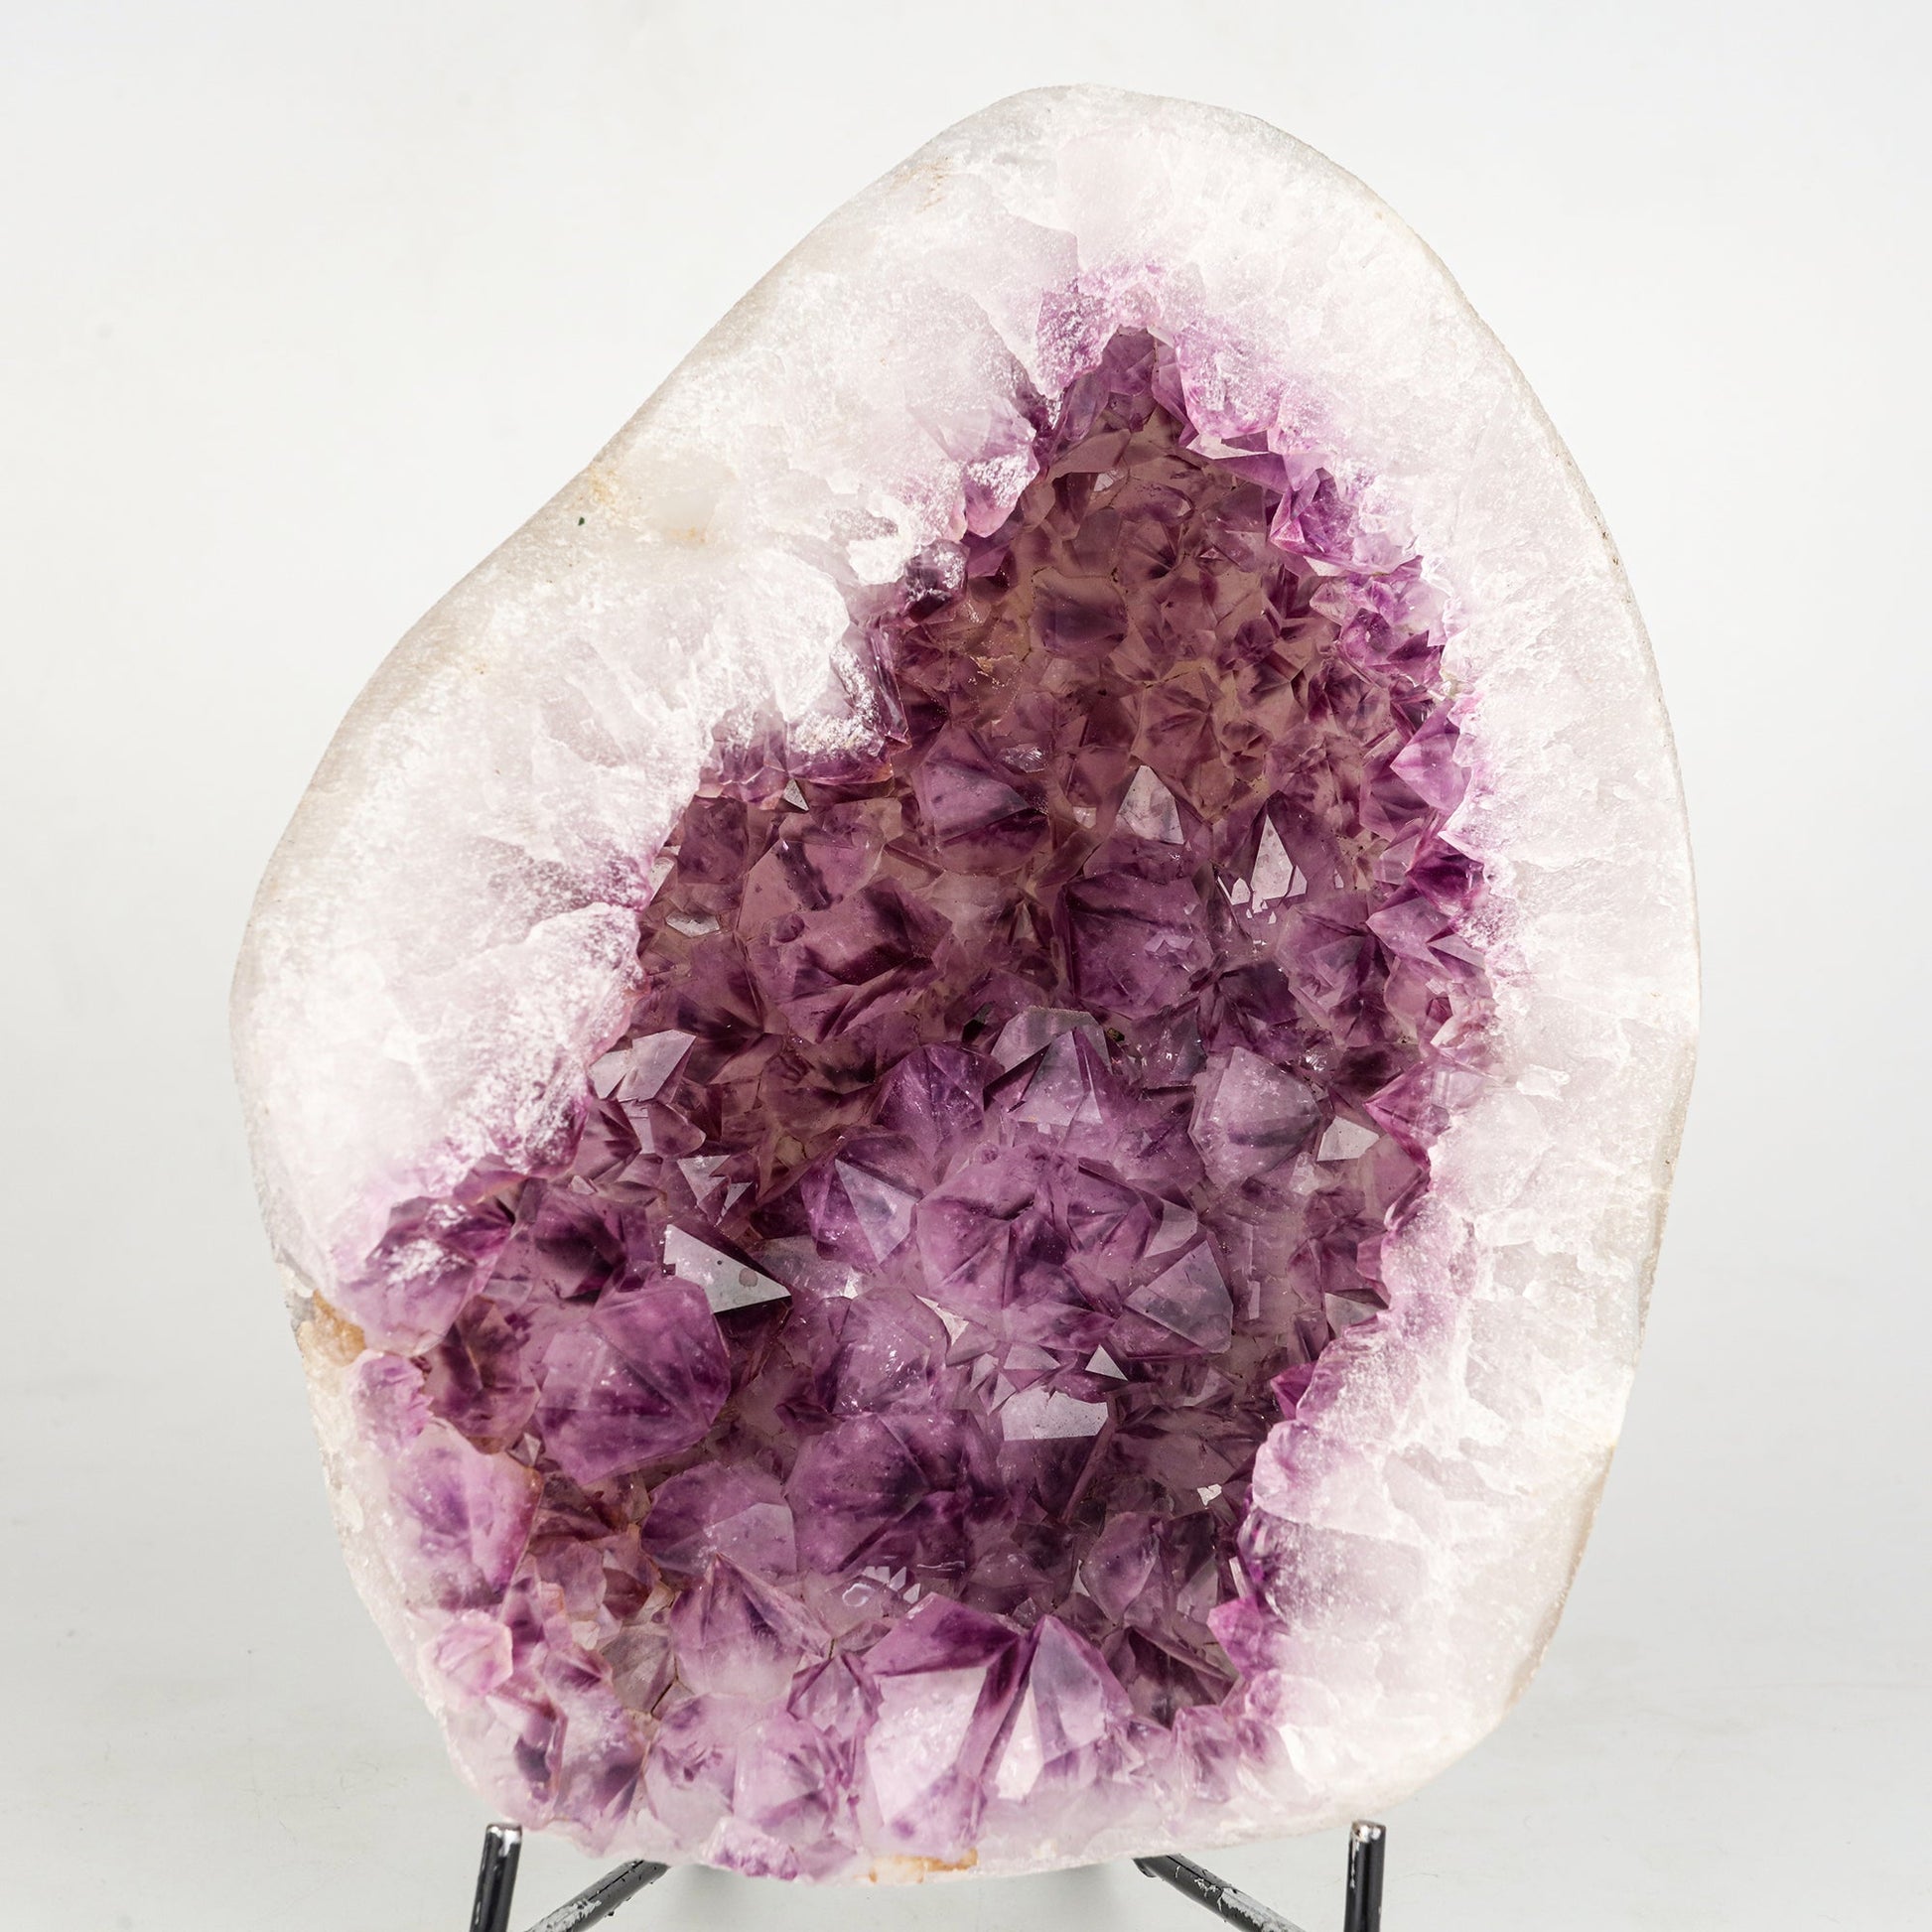 Amethyst Sparkling Crystals Geode in Half Natural Mineral Specimen # B 6241 Amethyst Superb Minerals 